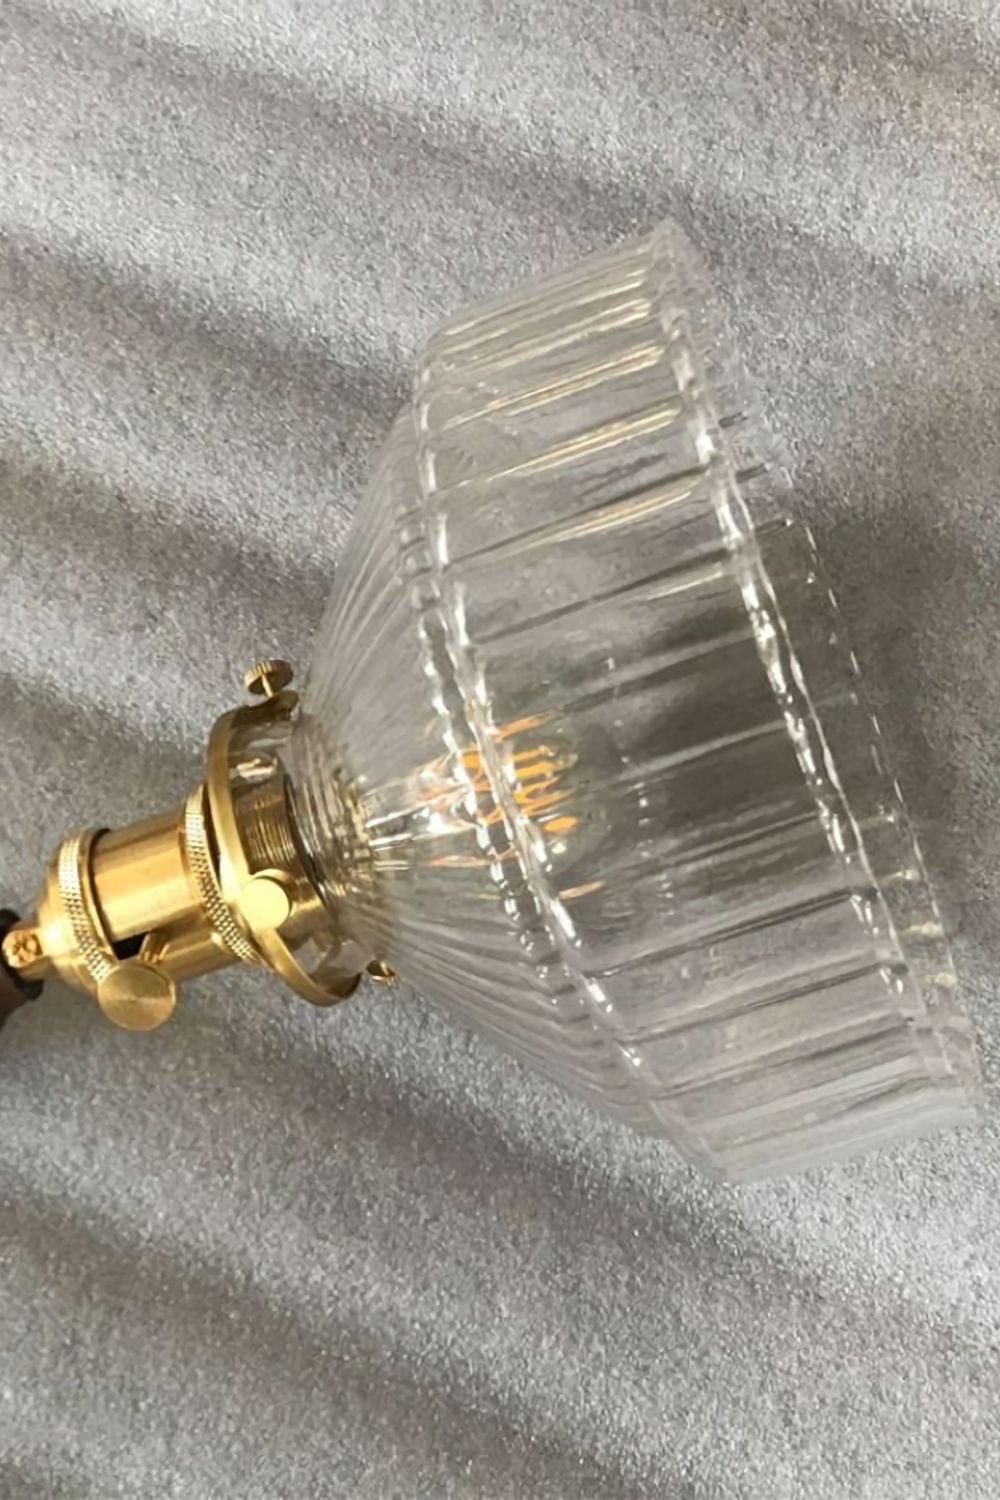 Vintage Glass Pendant Light - SamuLighting